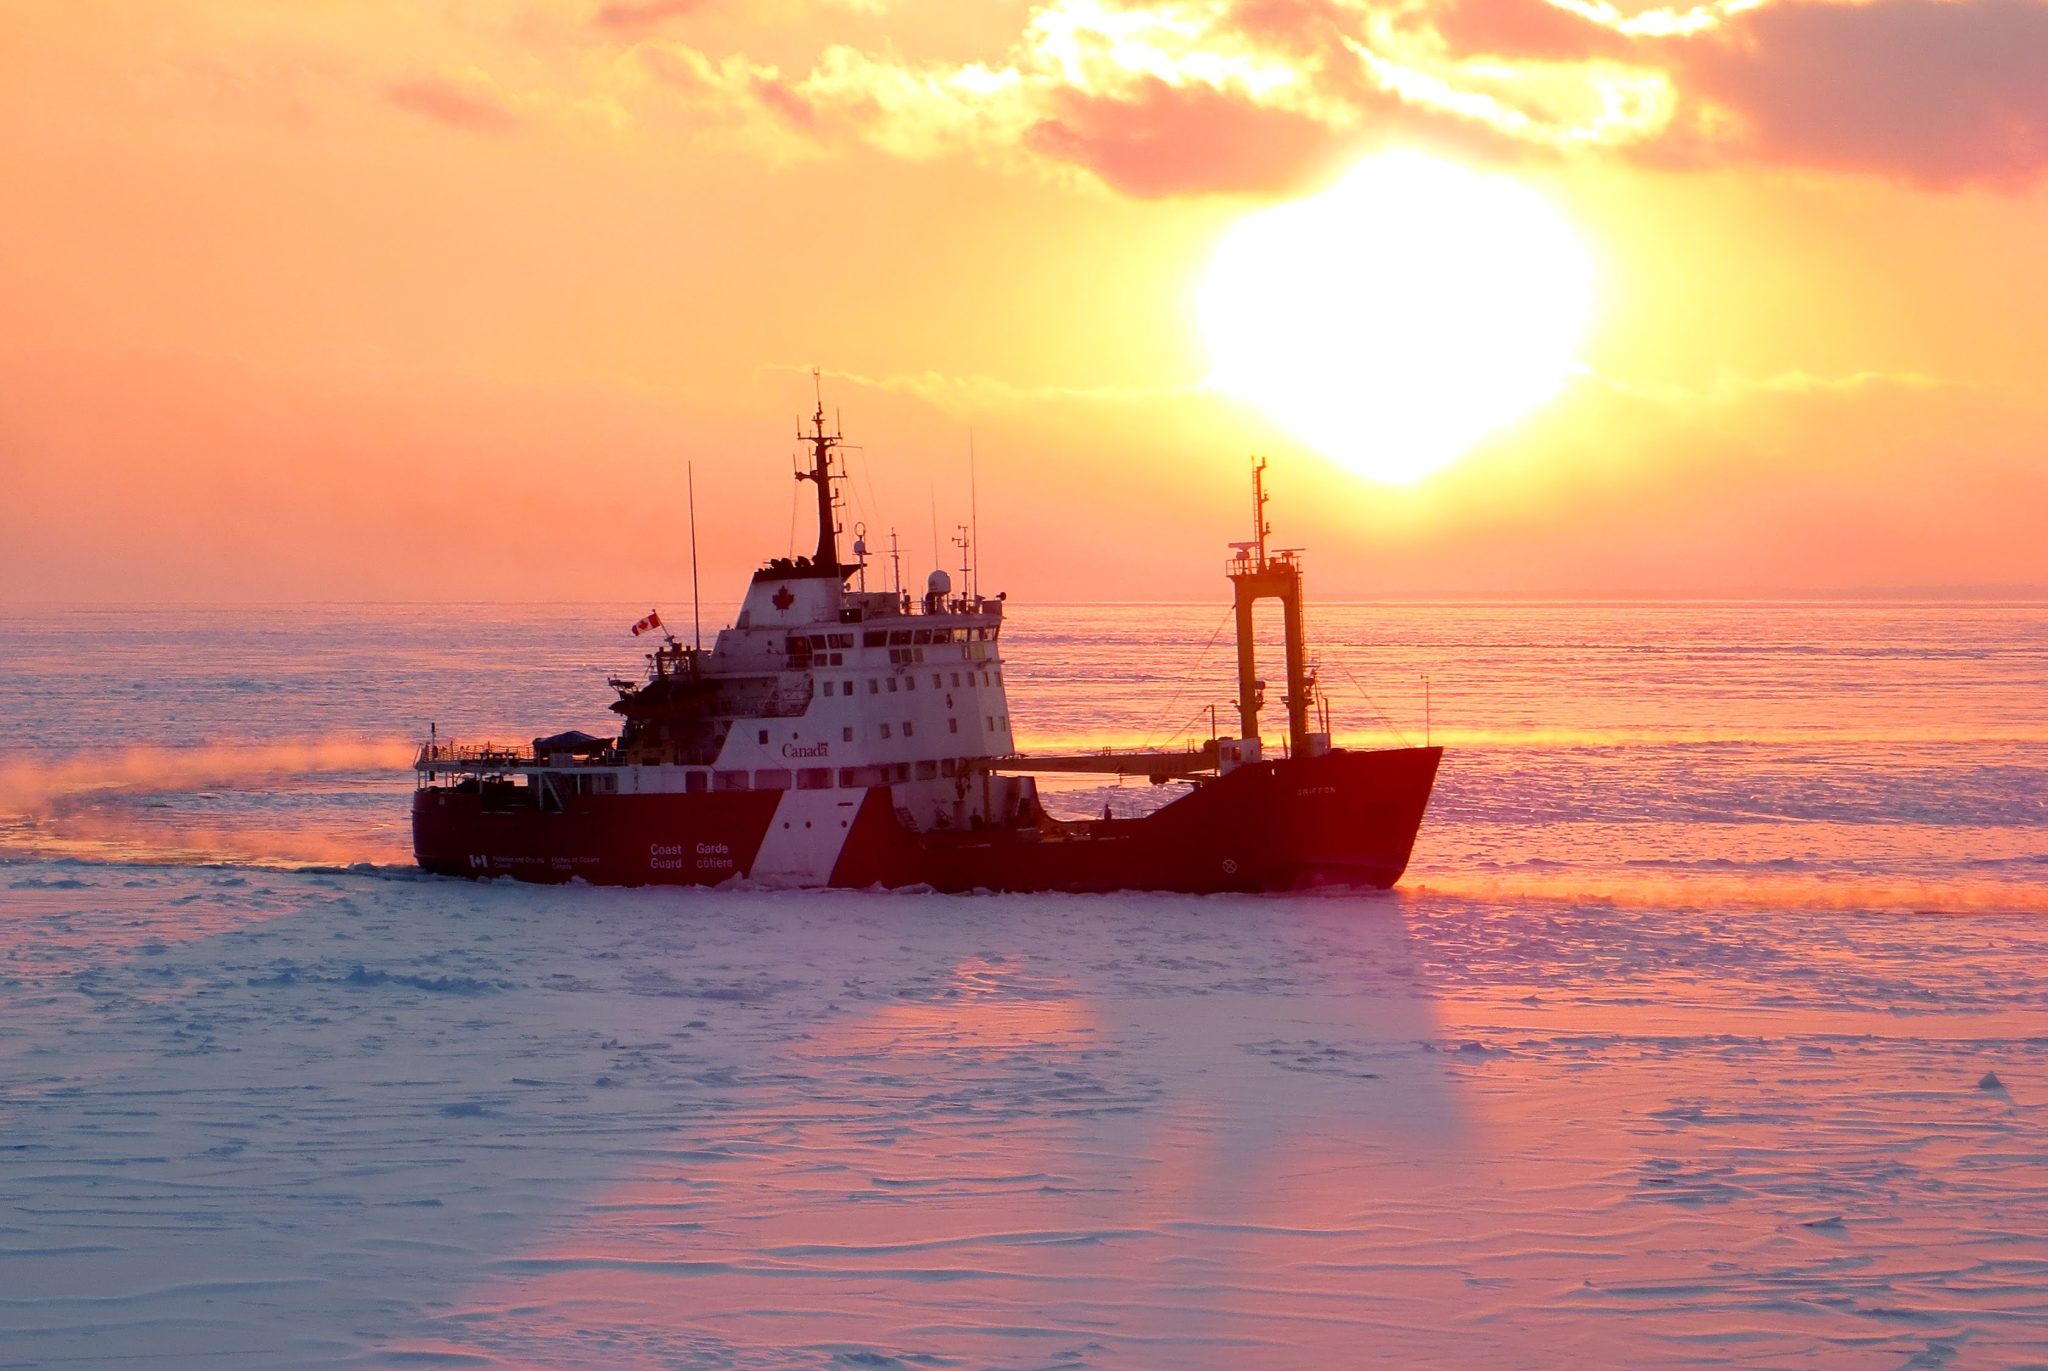 abb-to-provide-comprehensive-vessel-services-to-canadian-coast-guard-fleet-j-l-a